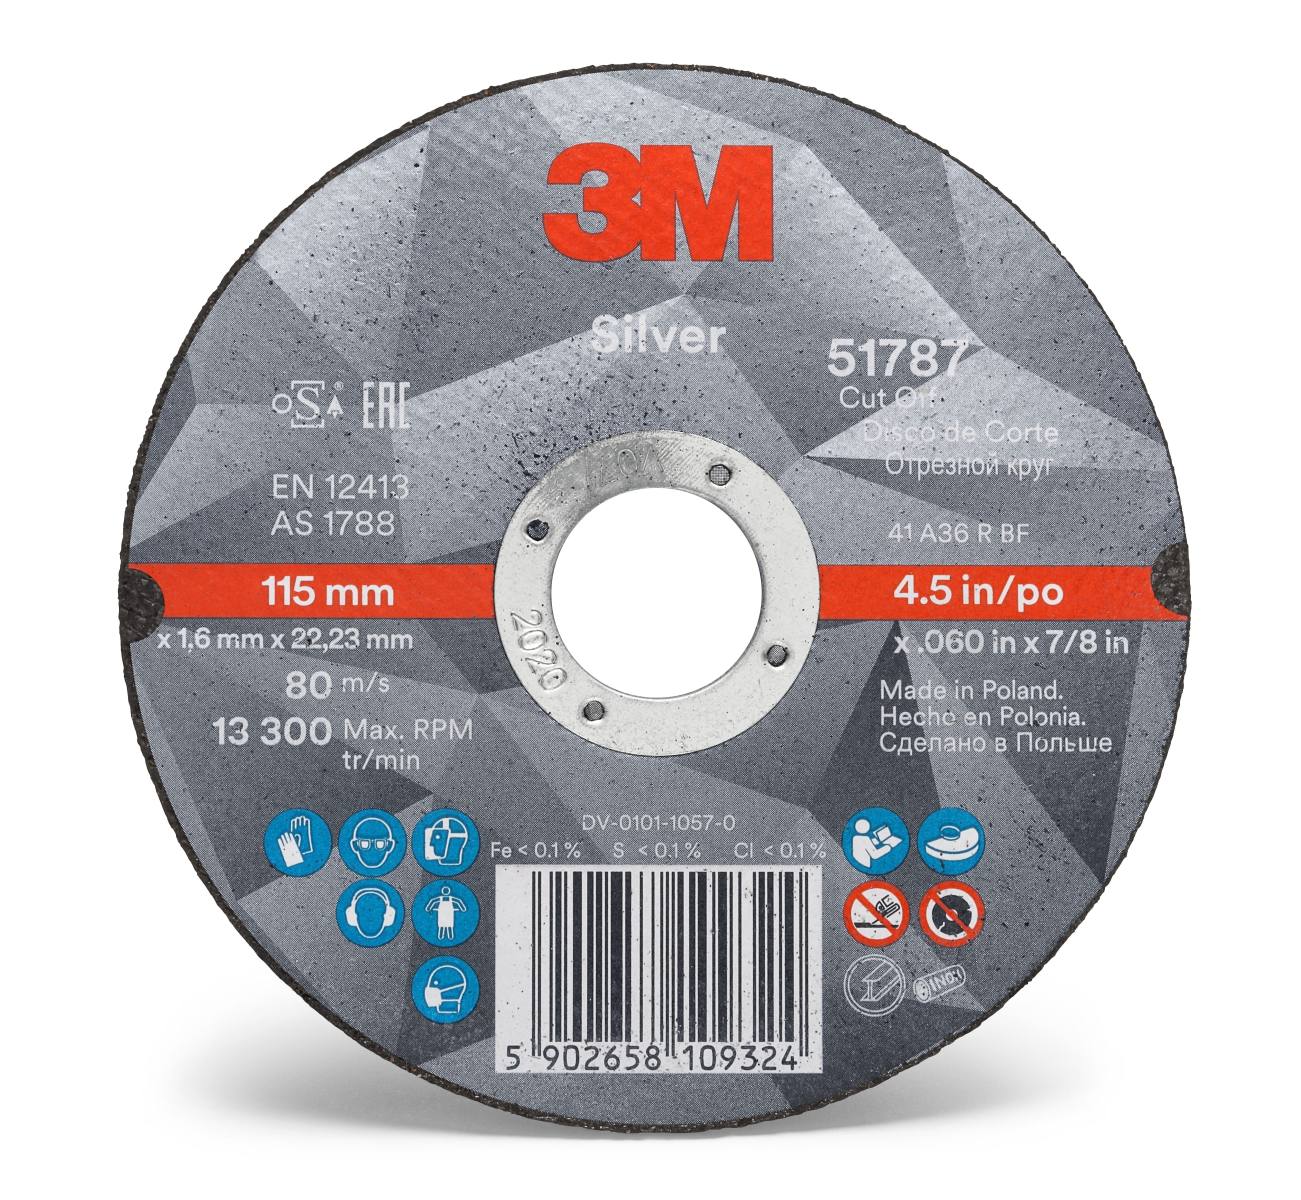 Disco de corte 3M Silver Cut-Off, 180 mm, 2,0 mm, 22,23 mm, T41, 51797